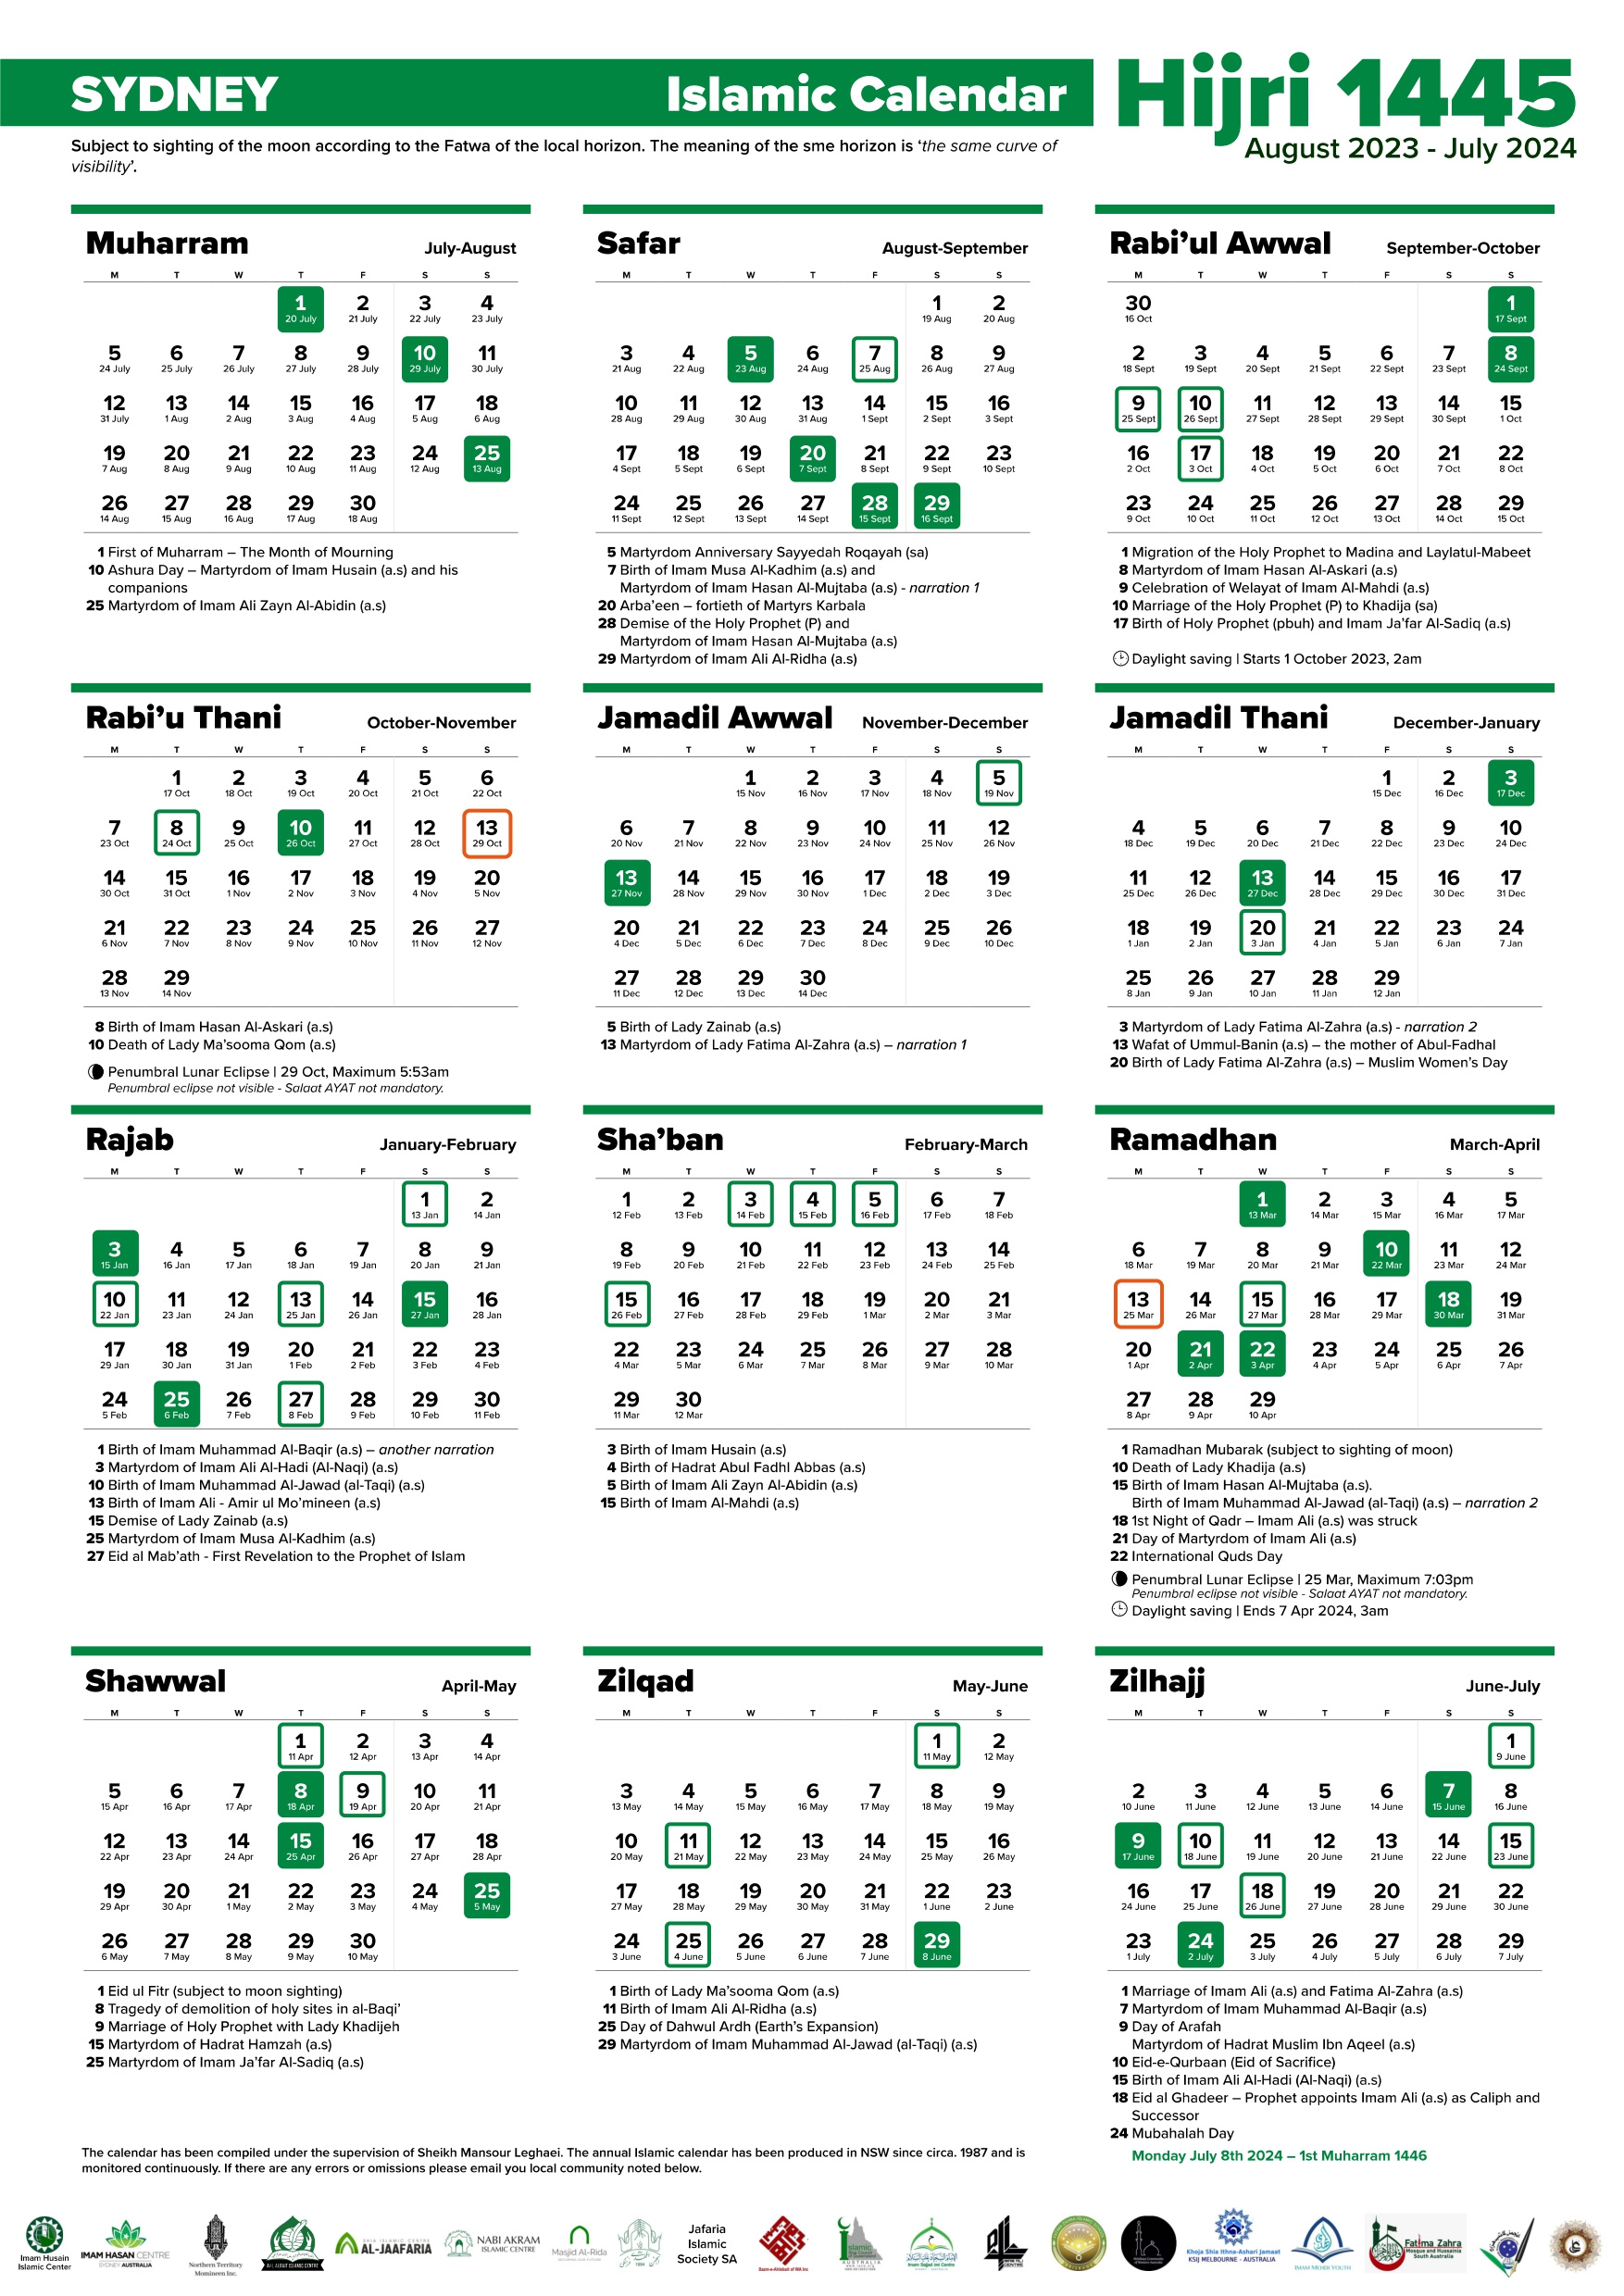 Annual Islamic Calendar 1445 Ah / 2023-2024 Ad – Imam Husain with regard to 4 July 2024 in Islamic Calendar